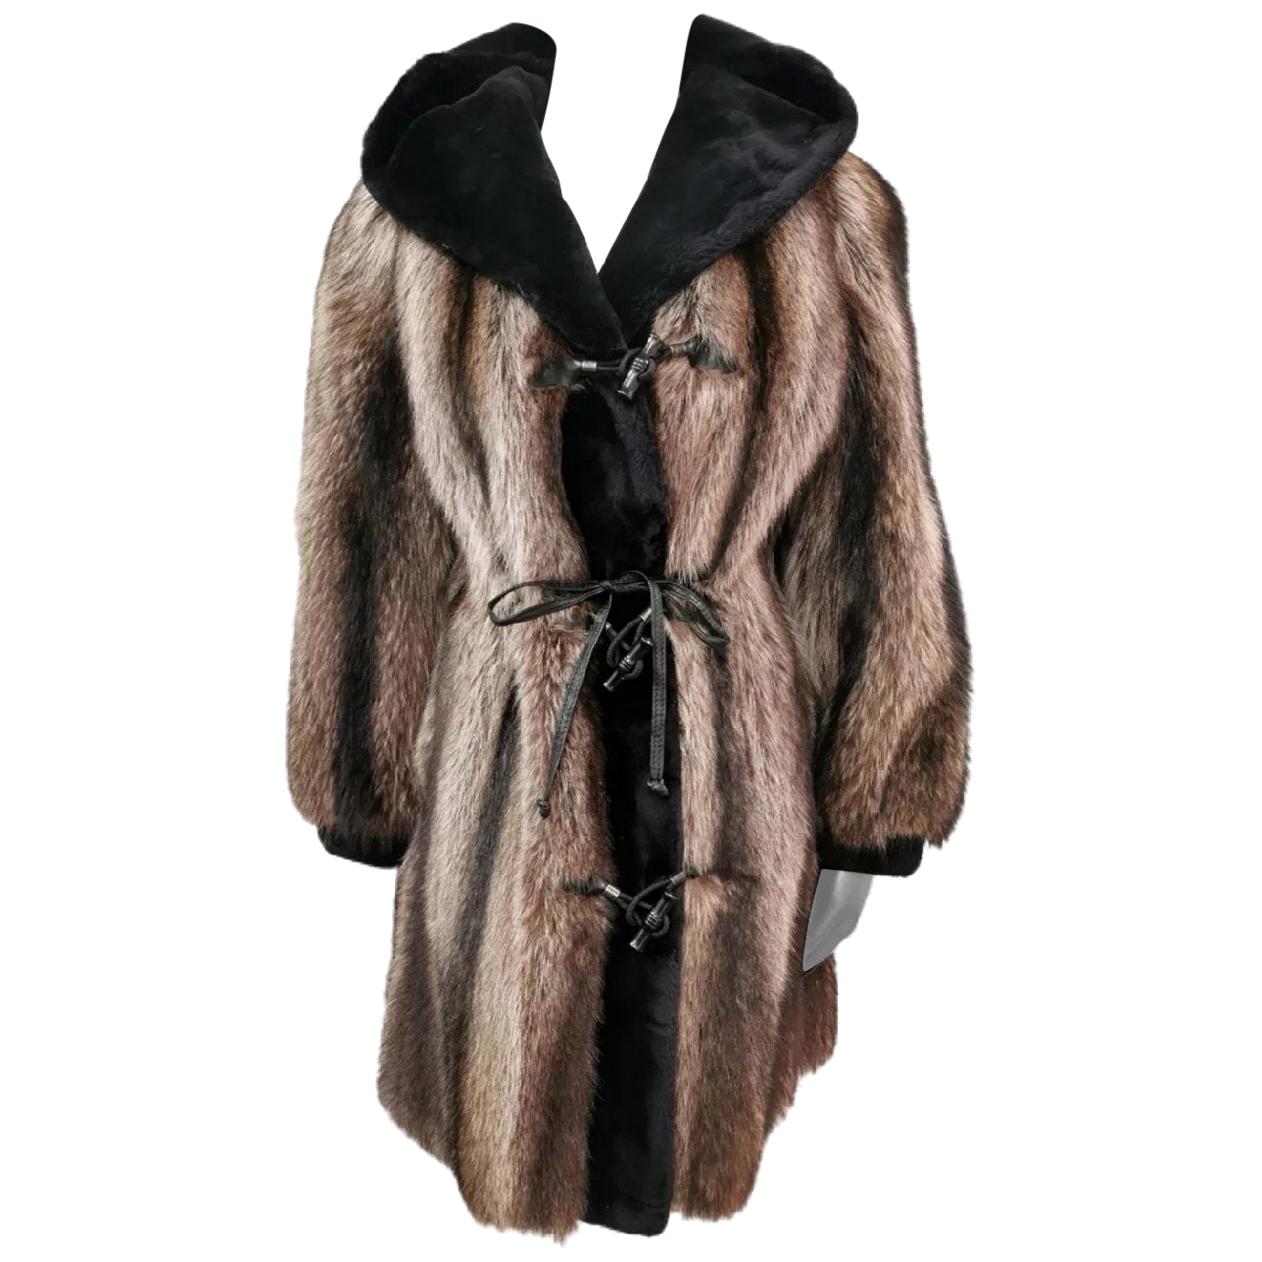 Birger christensen raccoon fur coat with sheared beaver trim size 4-6